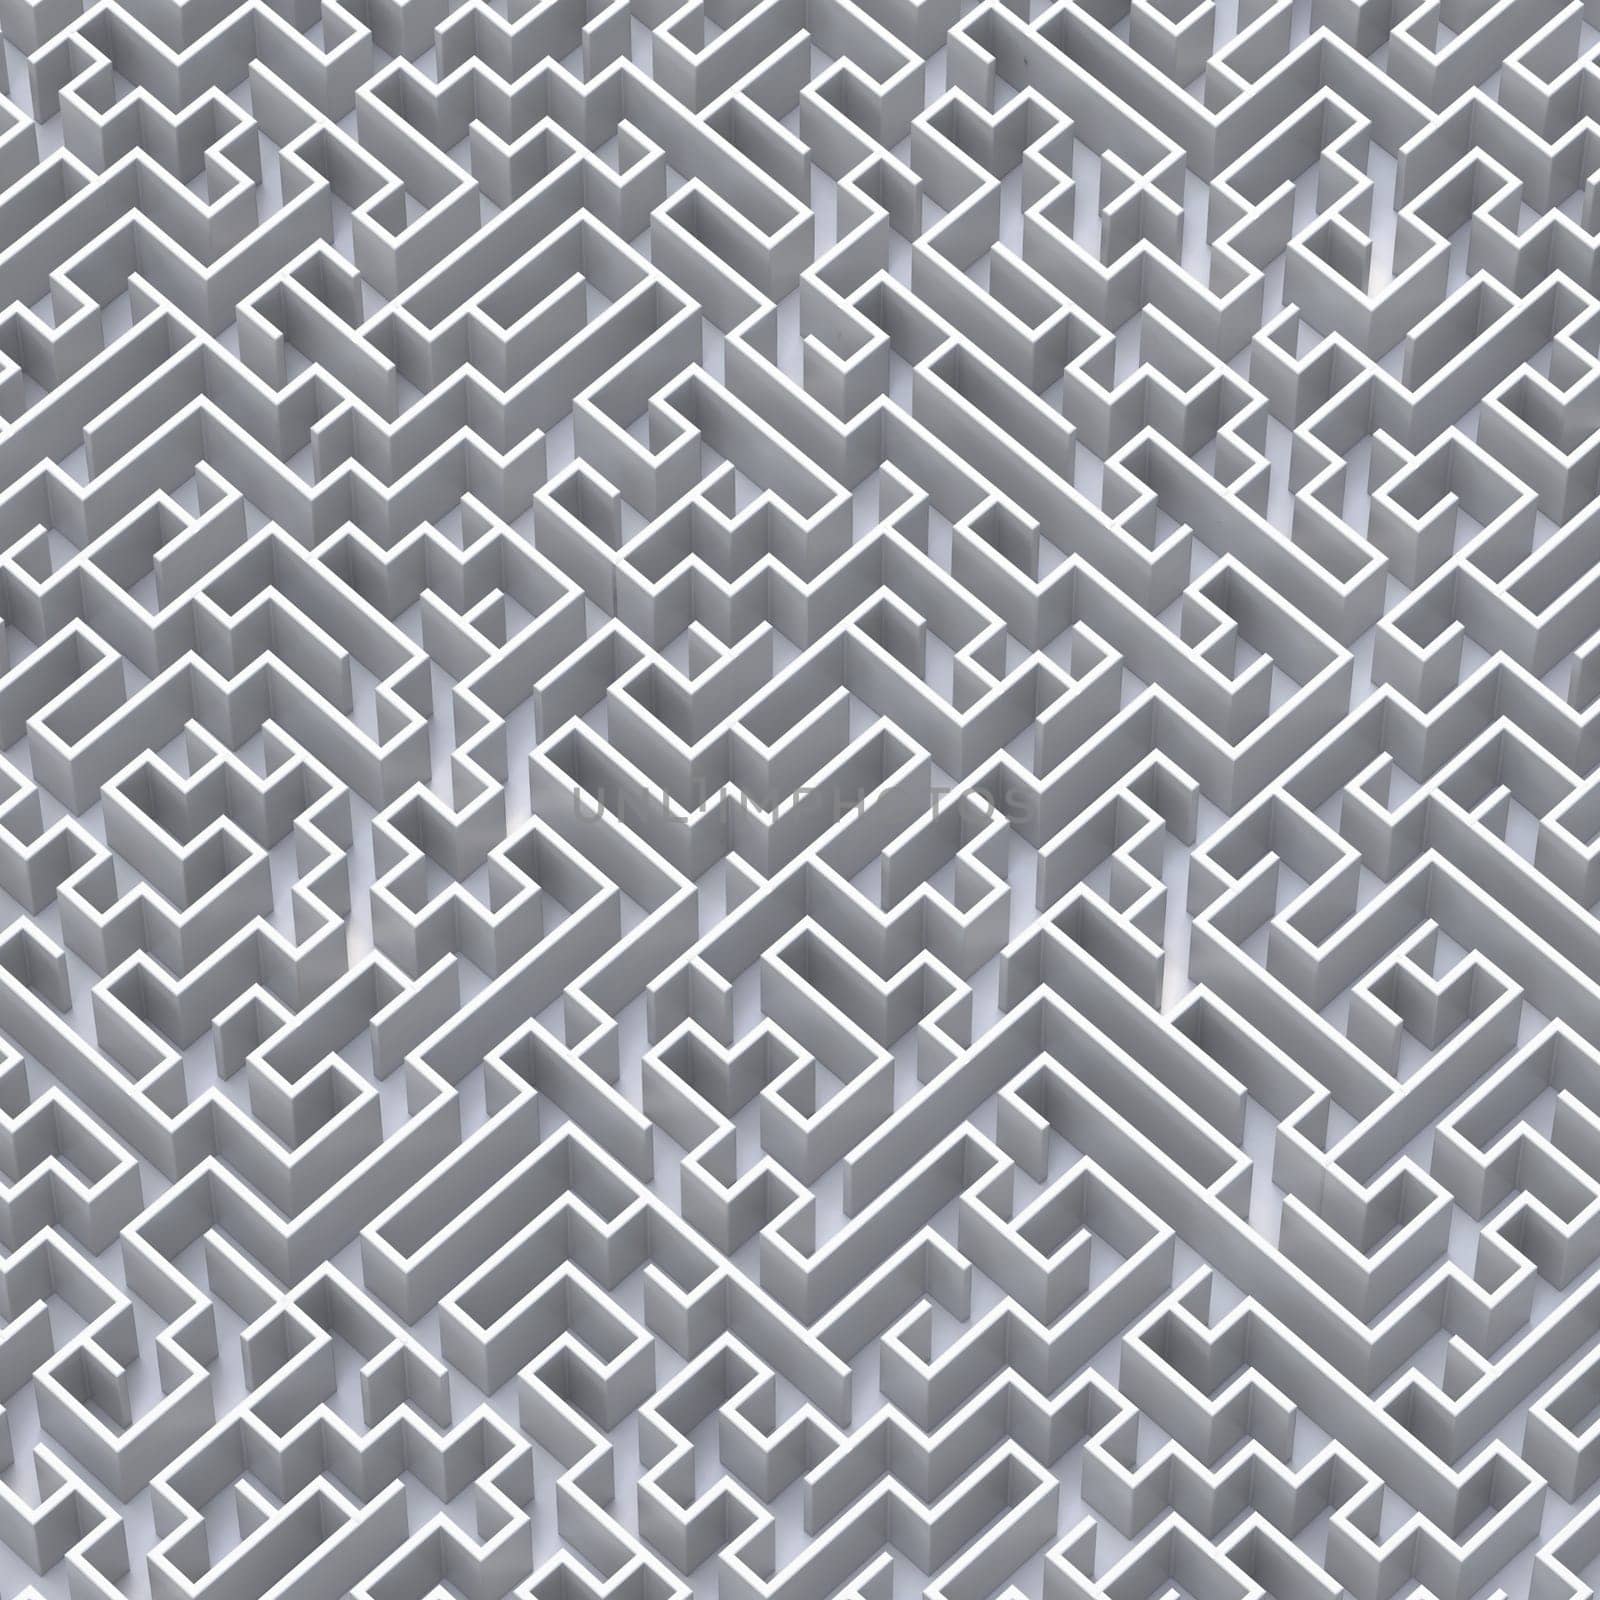 Endless labyrinth 3D by djmilic